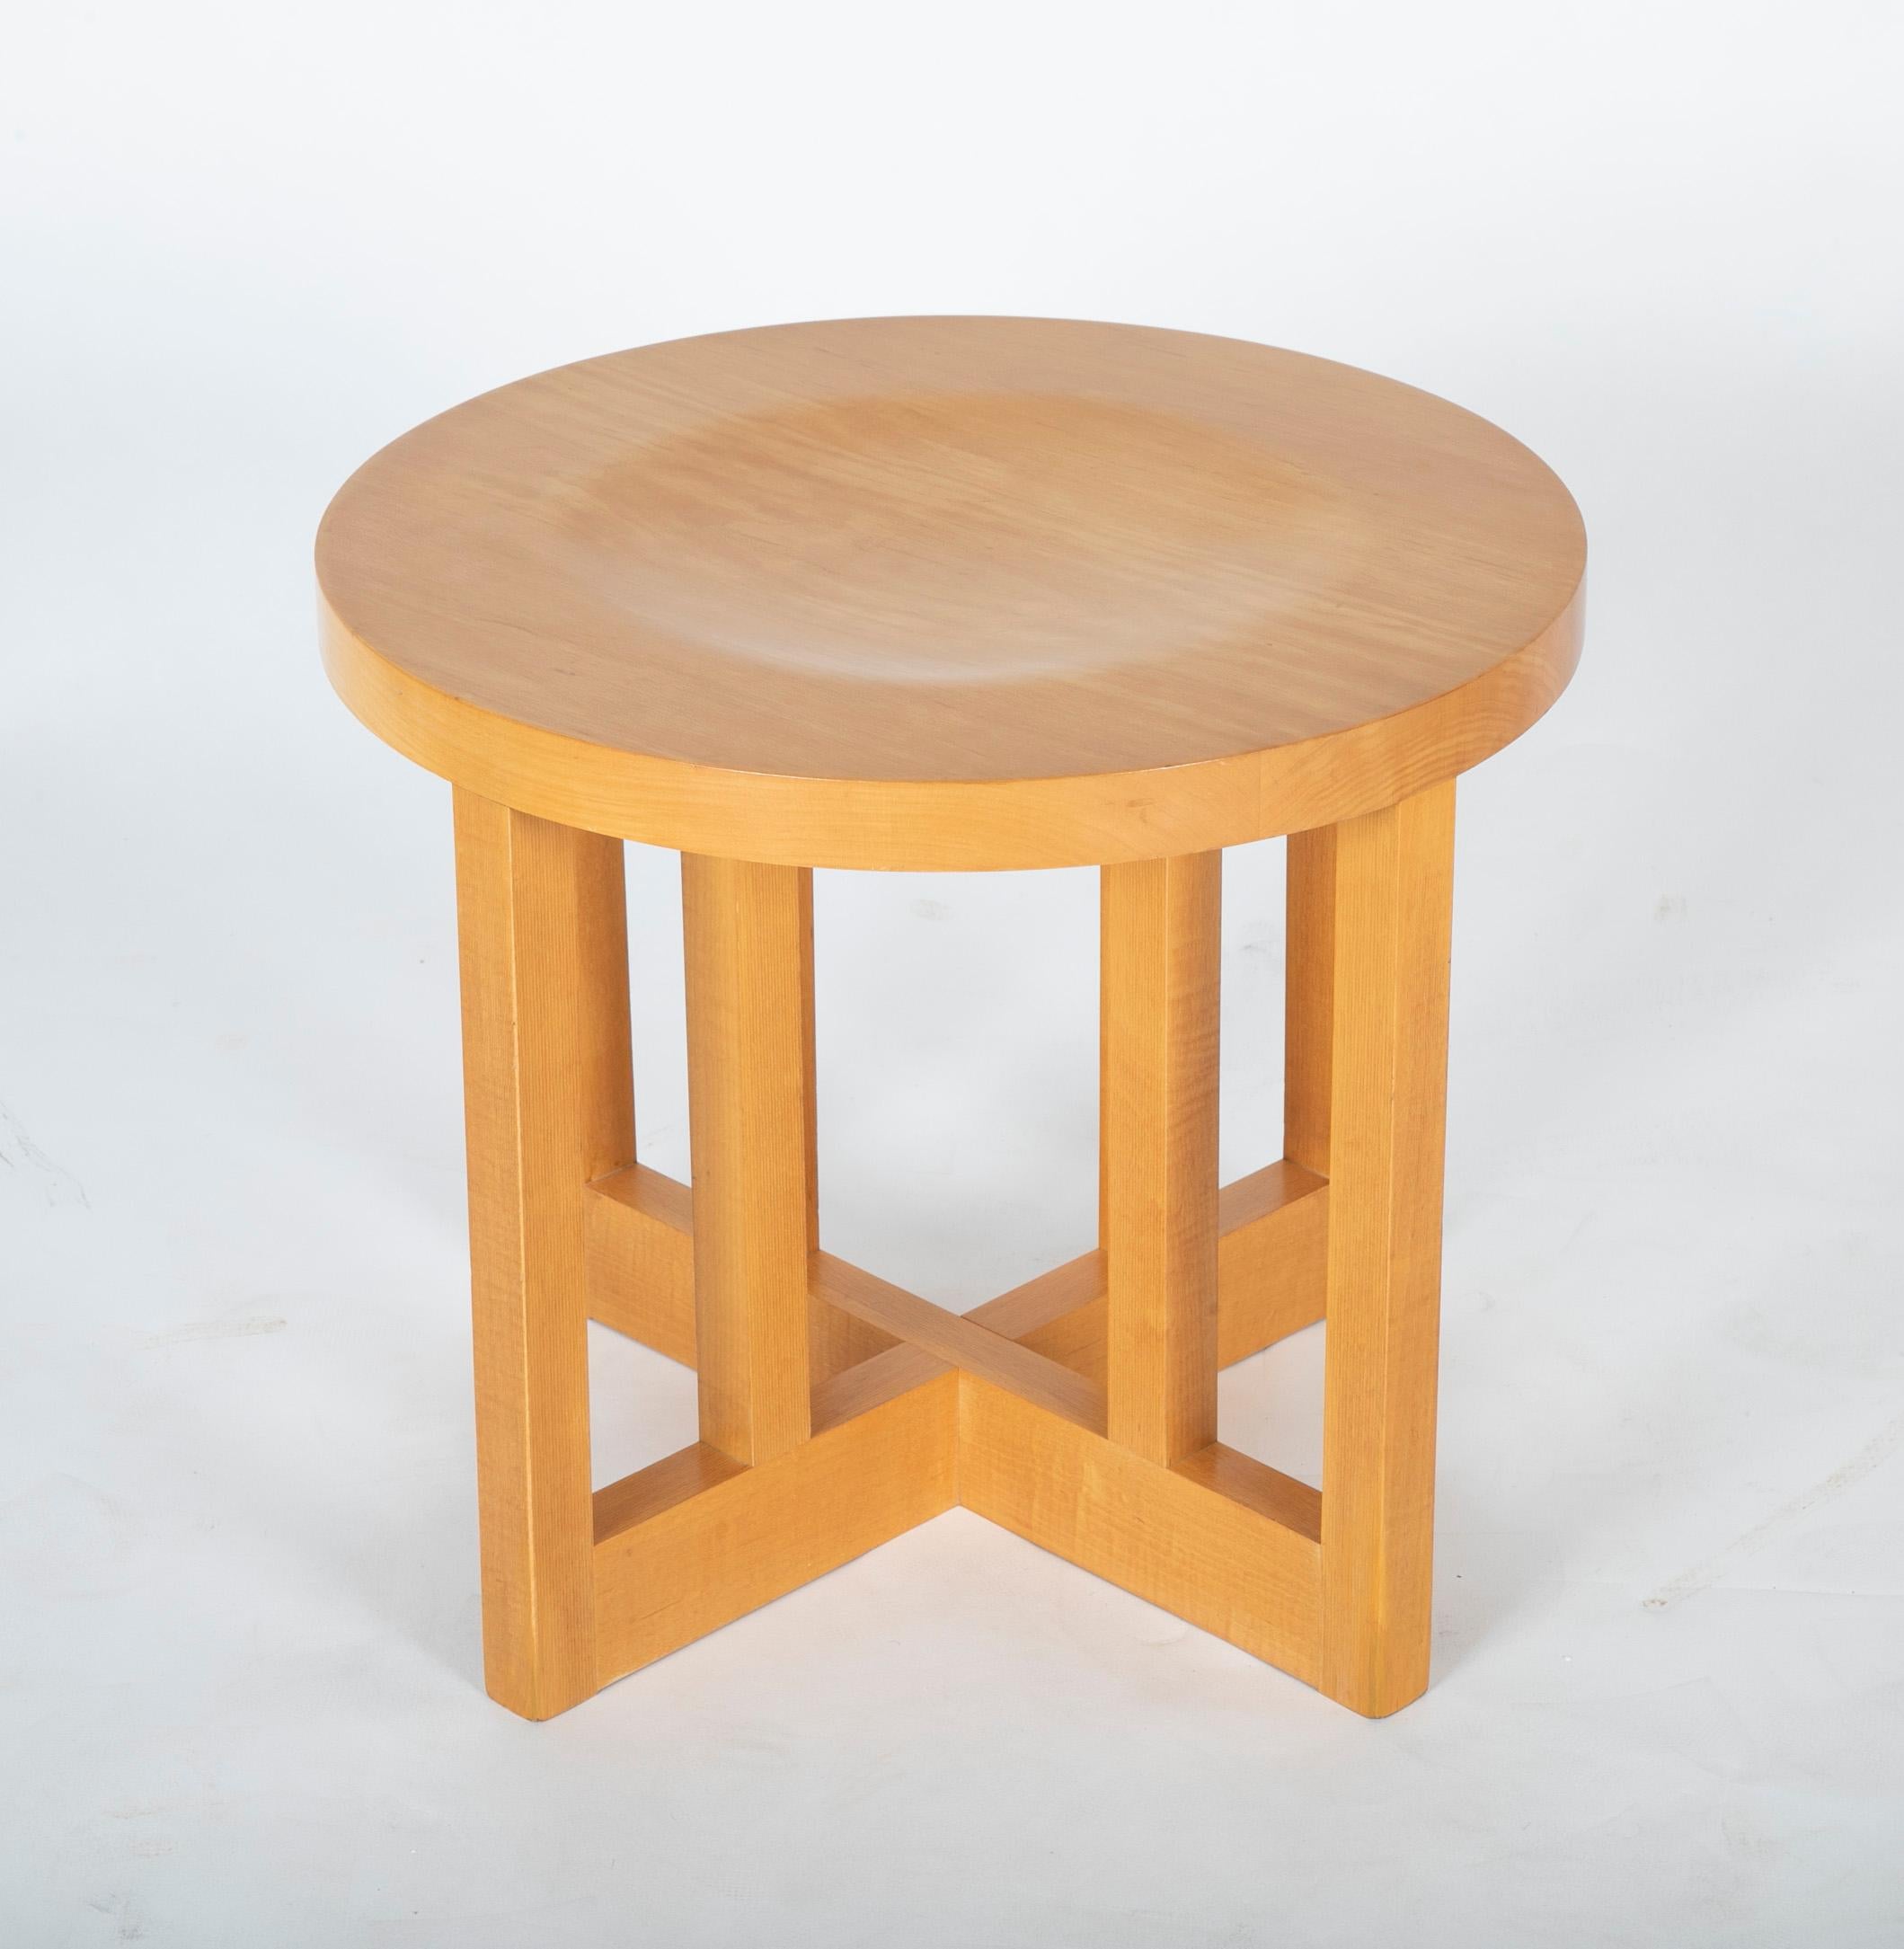 A Maple side table / stool designed by Richard Meire for Knoll circa 1982. 
Literature: Richard Meier: Architect, Meier, pg. 234 Richard Meier: Art and Architecture, Blouin MacBain, pg. 88 KnollStudio, price list, 1988, pg. 56.